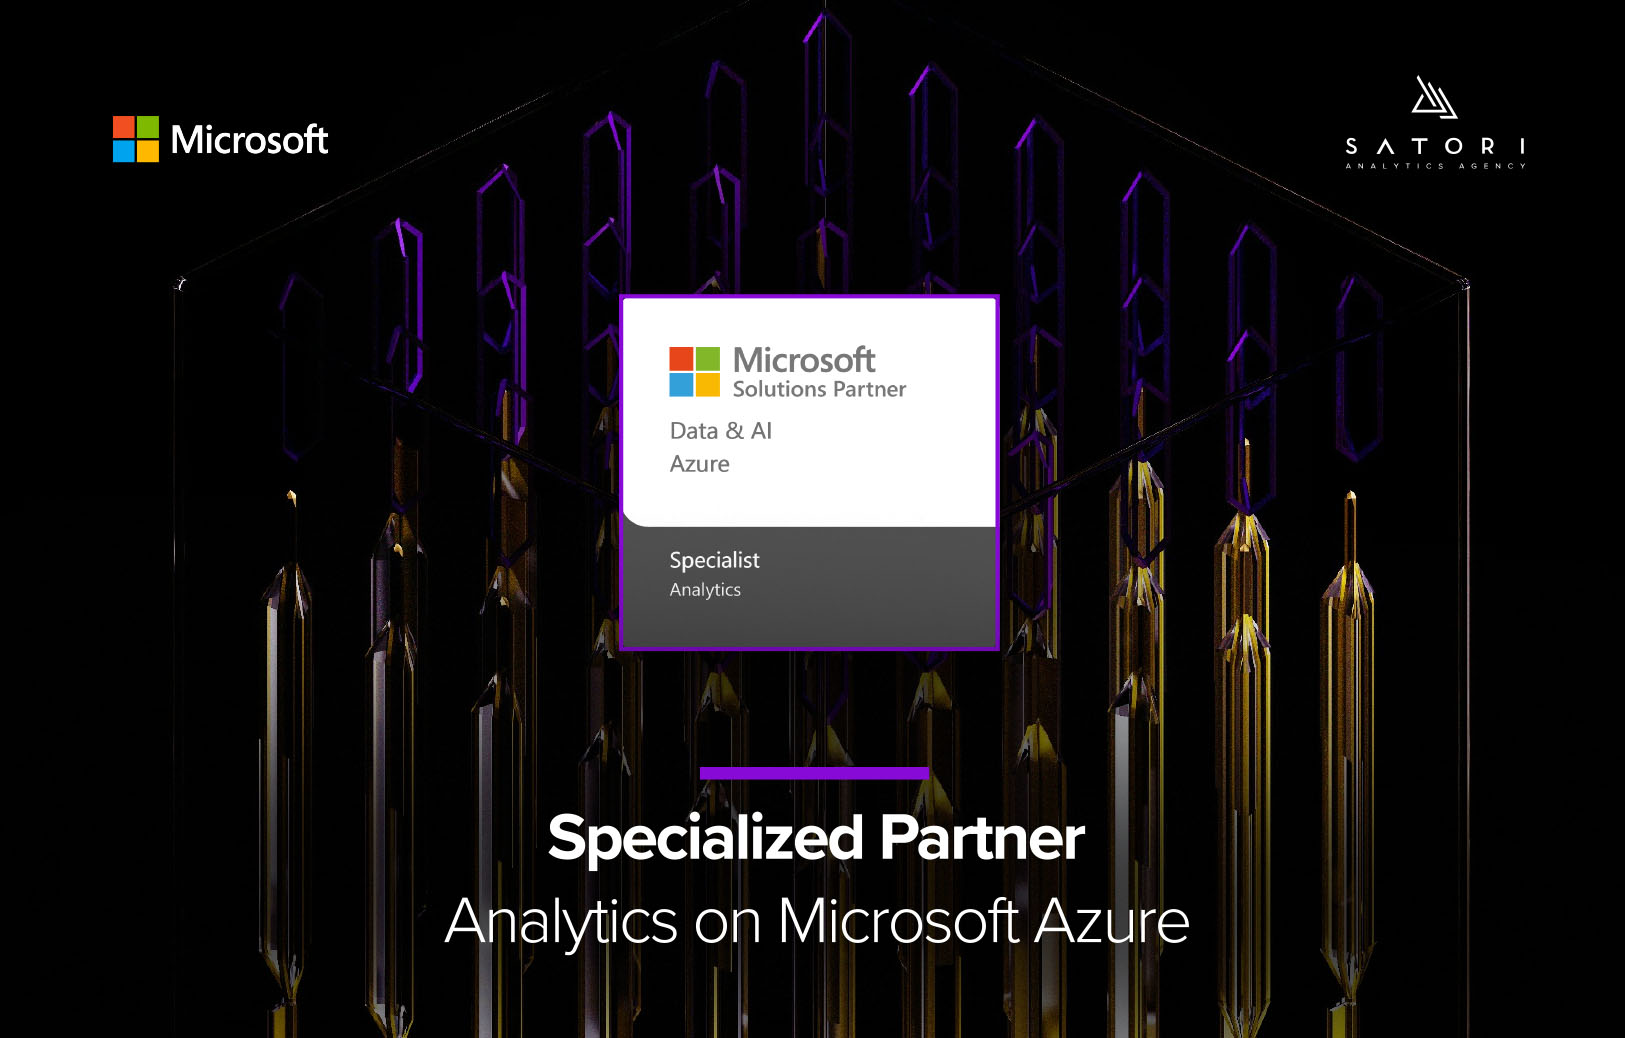 Satori Analytics earns the Analytics on Microsoft Azure specialization